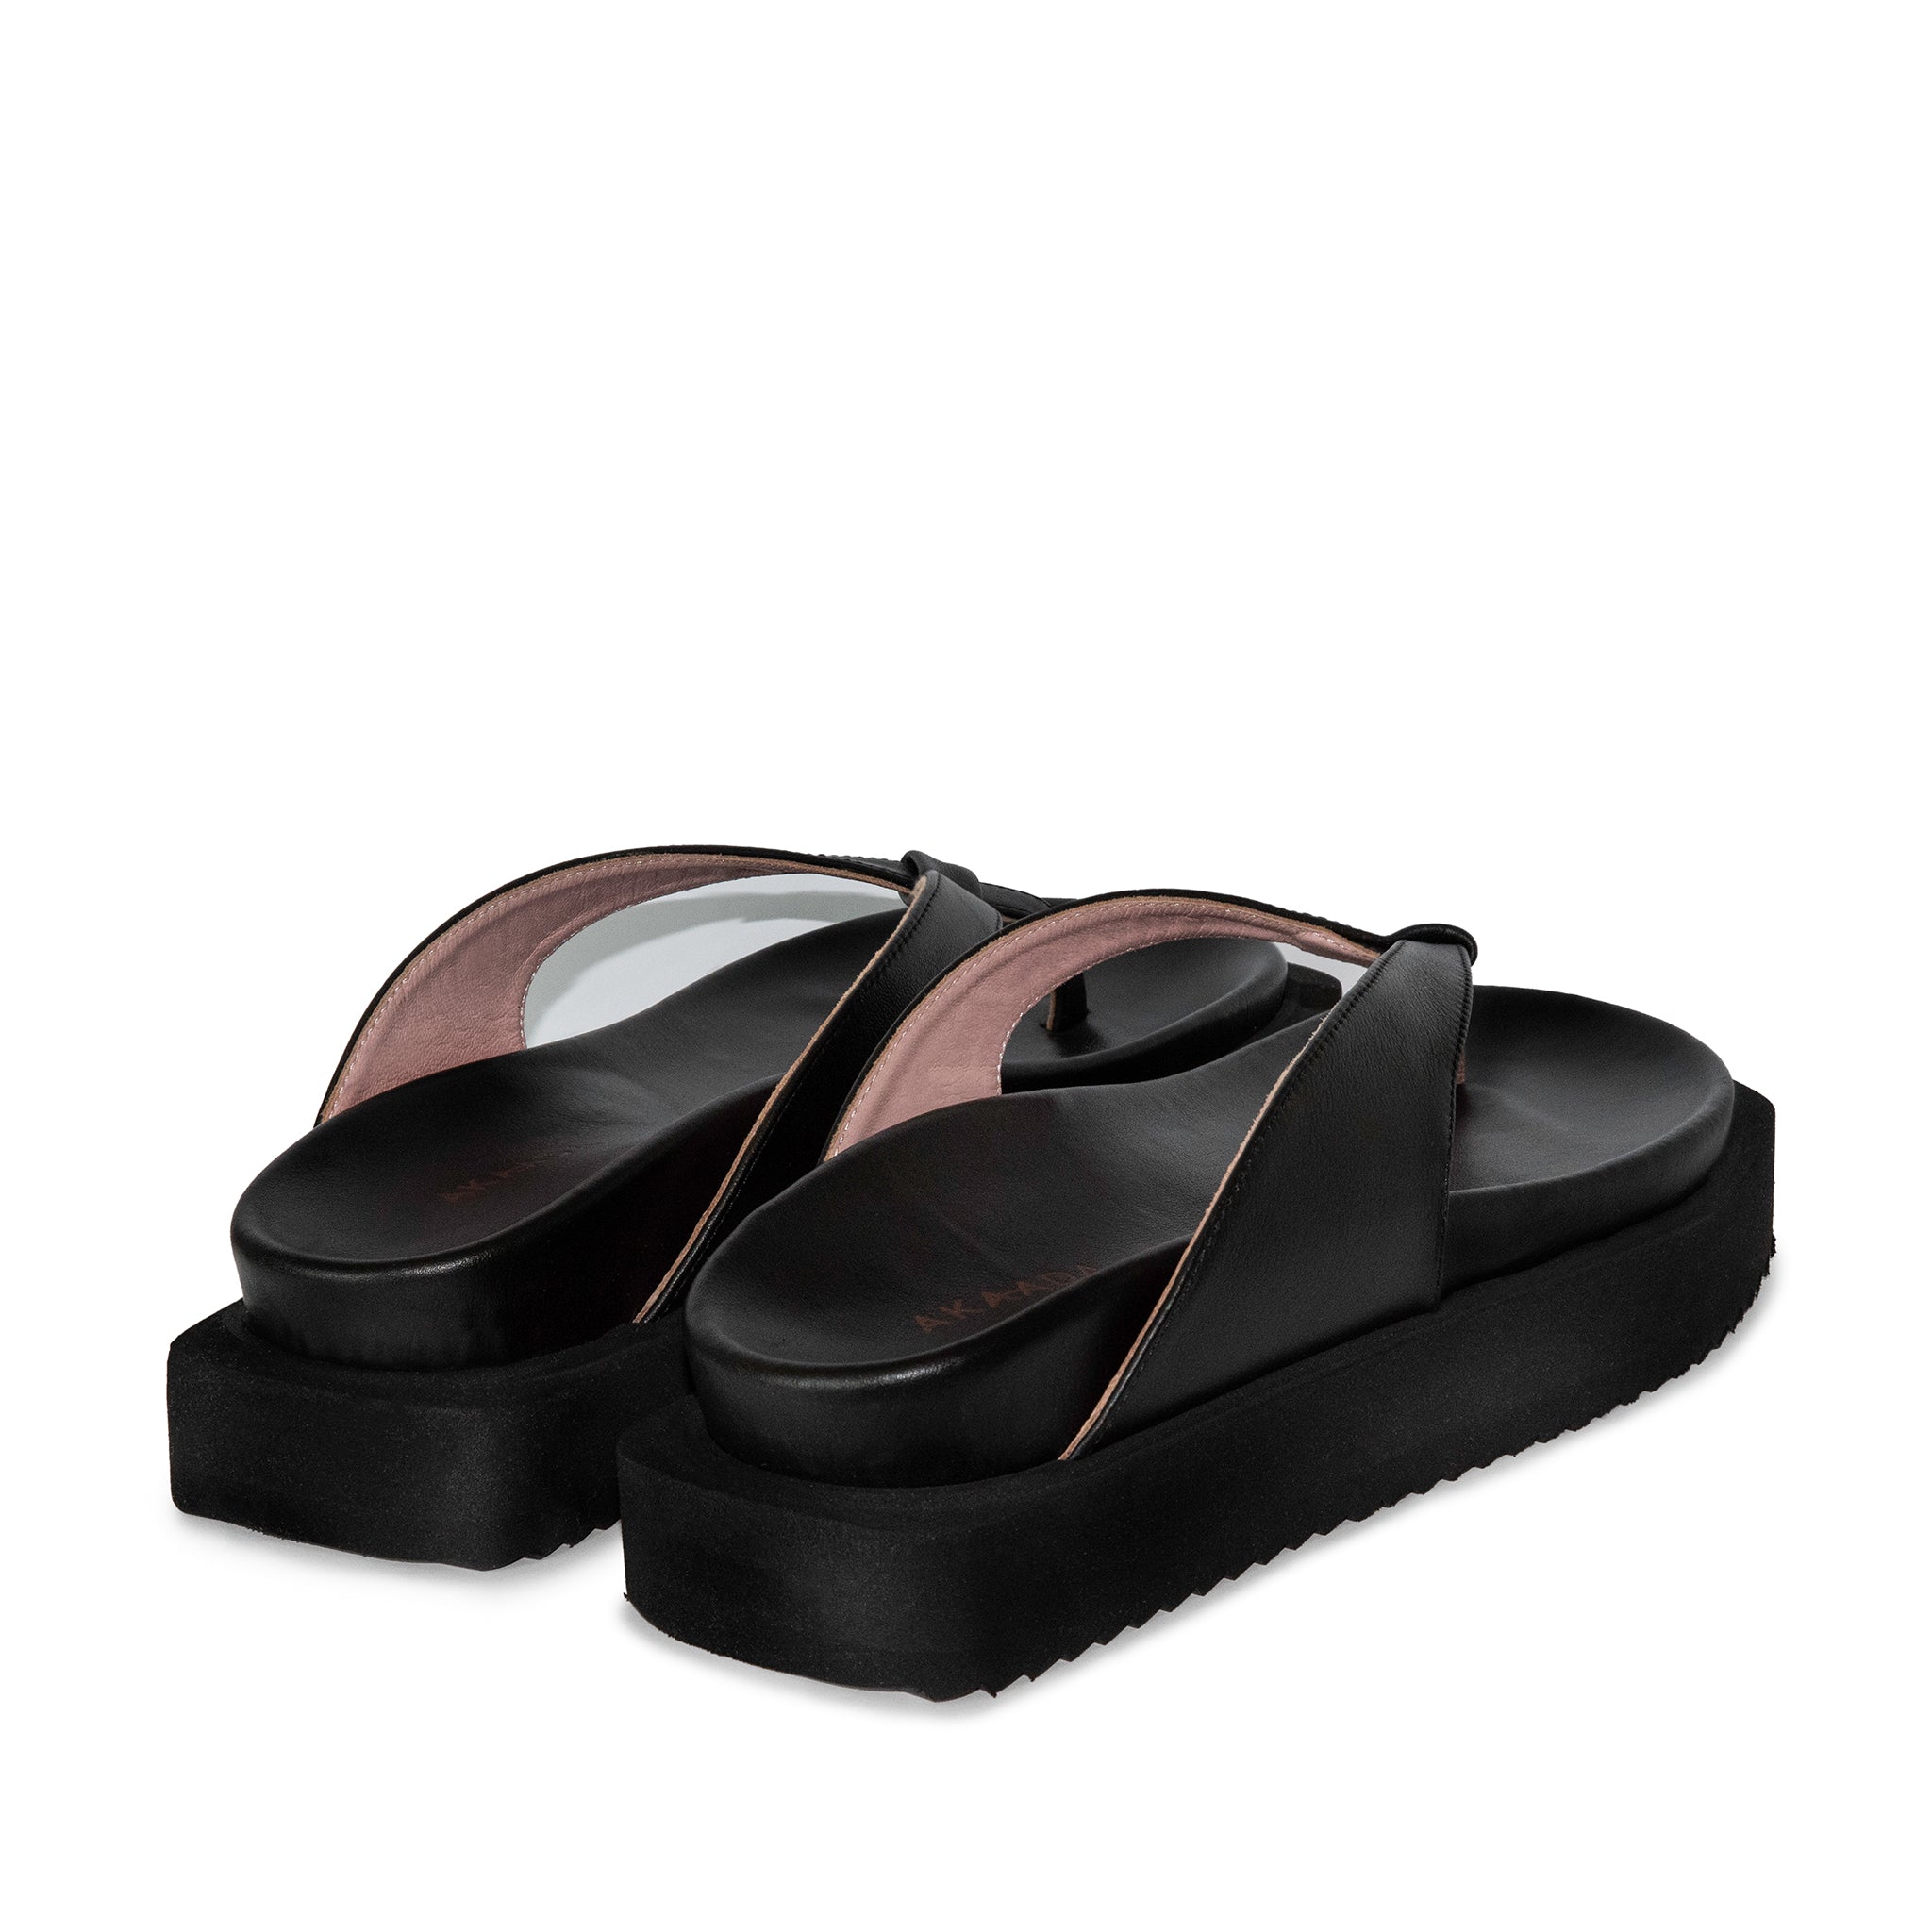 Sora Black Leather Sandals LES23127-BLACK - 5